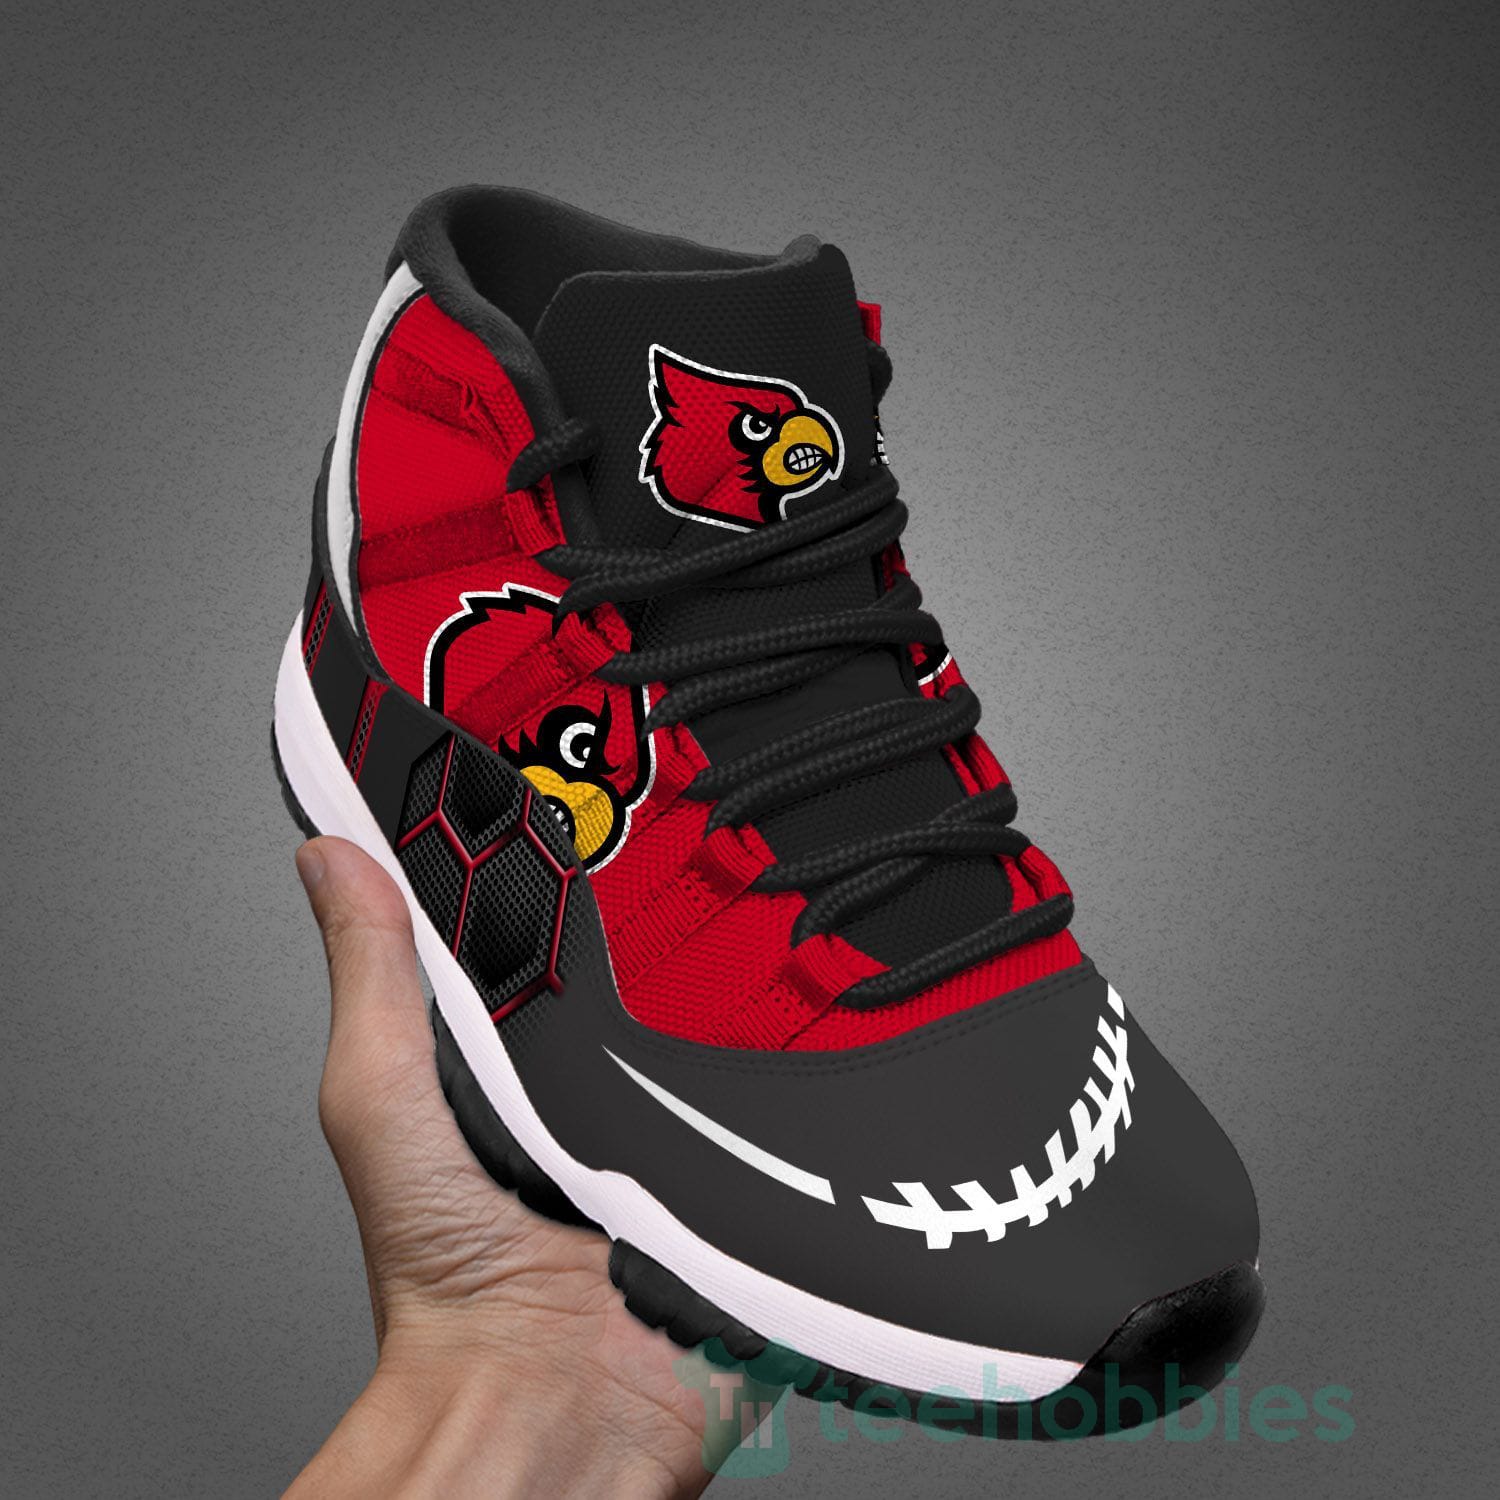 Louisville Cardinals New Air Jordan 11 Shoes Product photo 2